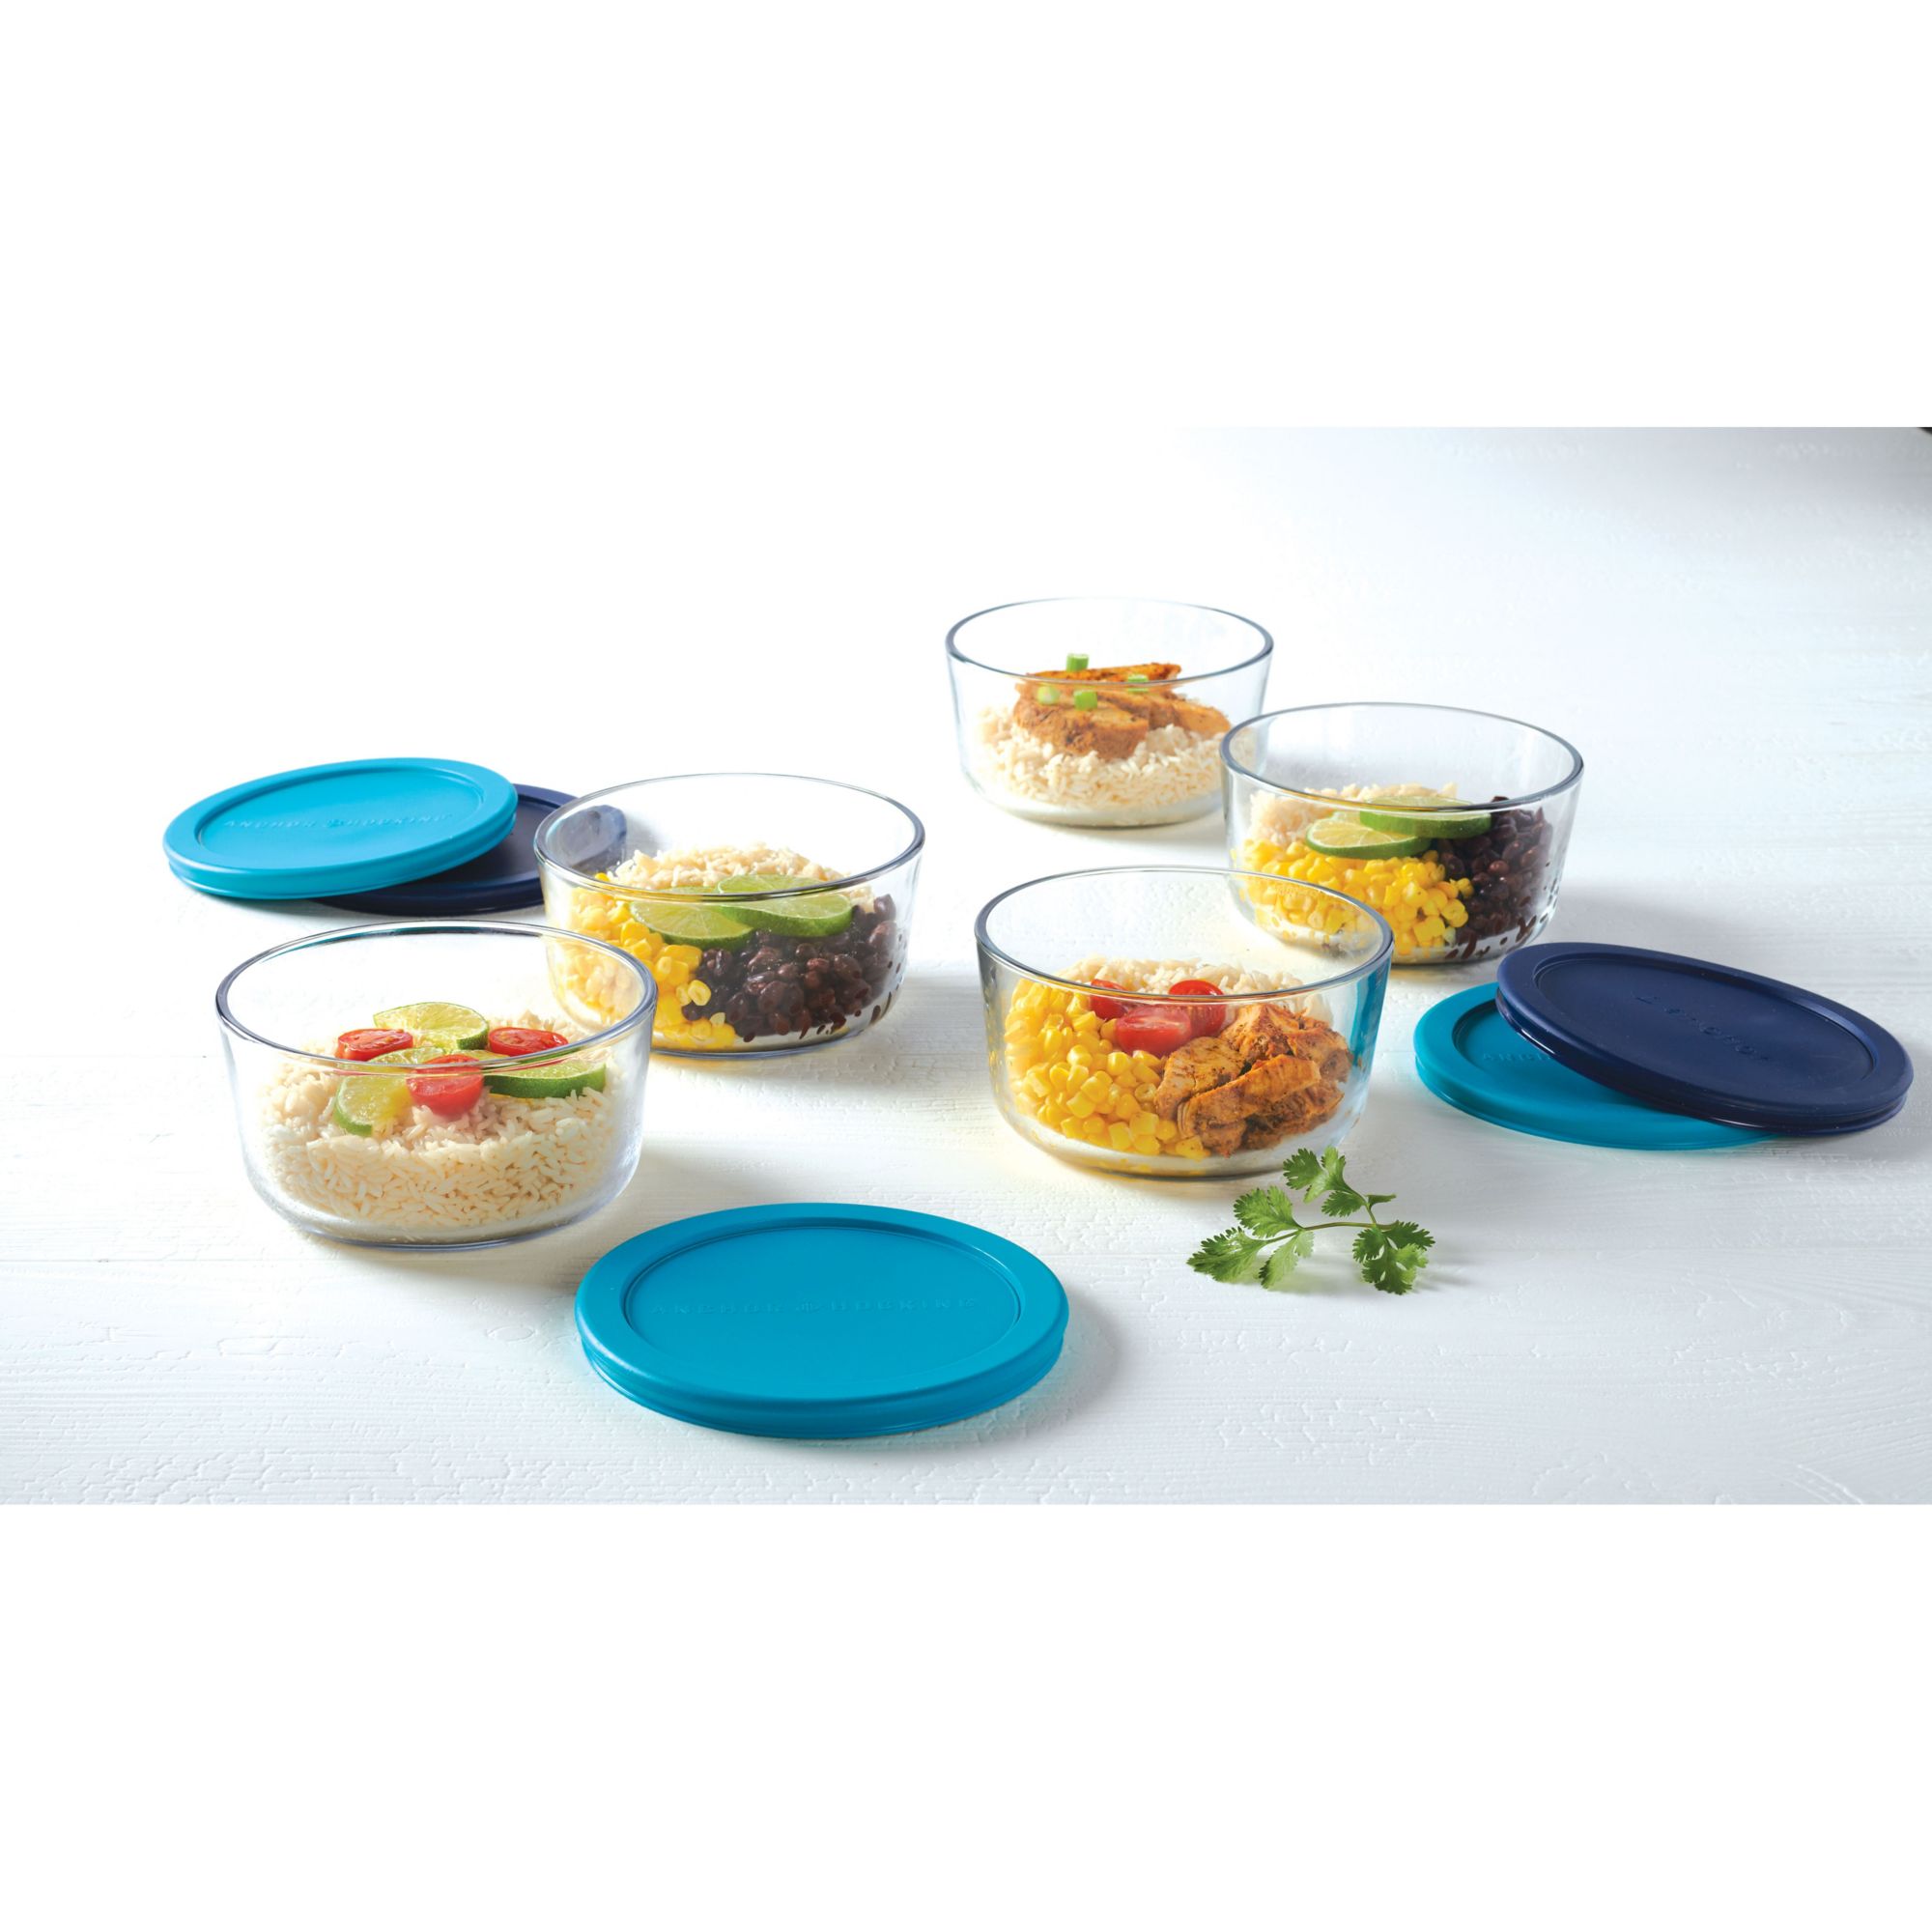 Cook Works Glass 10-Piece Food Storage Set